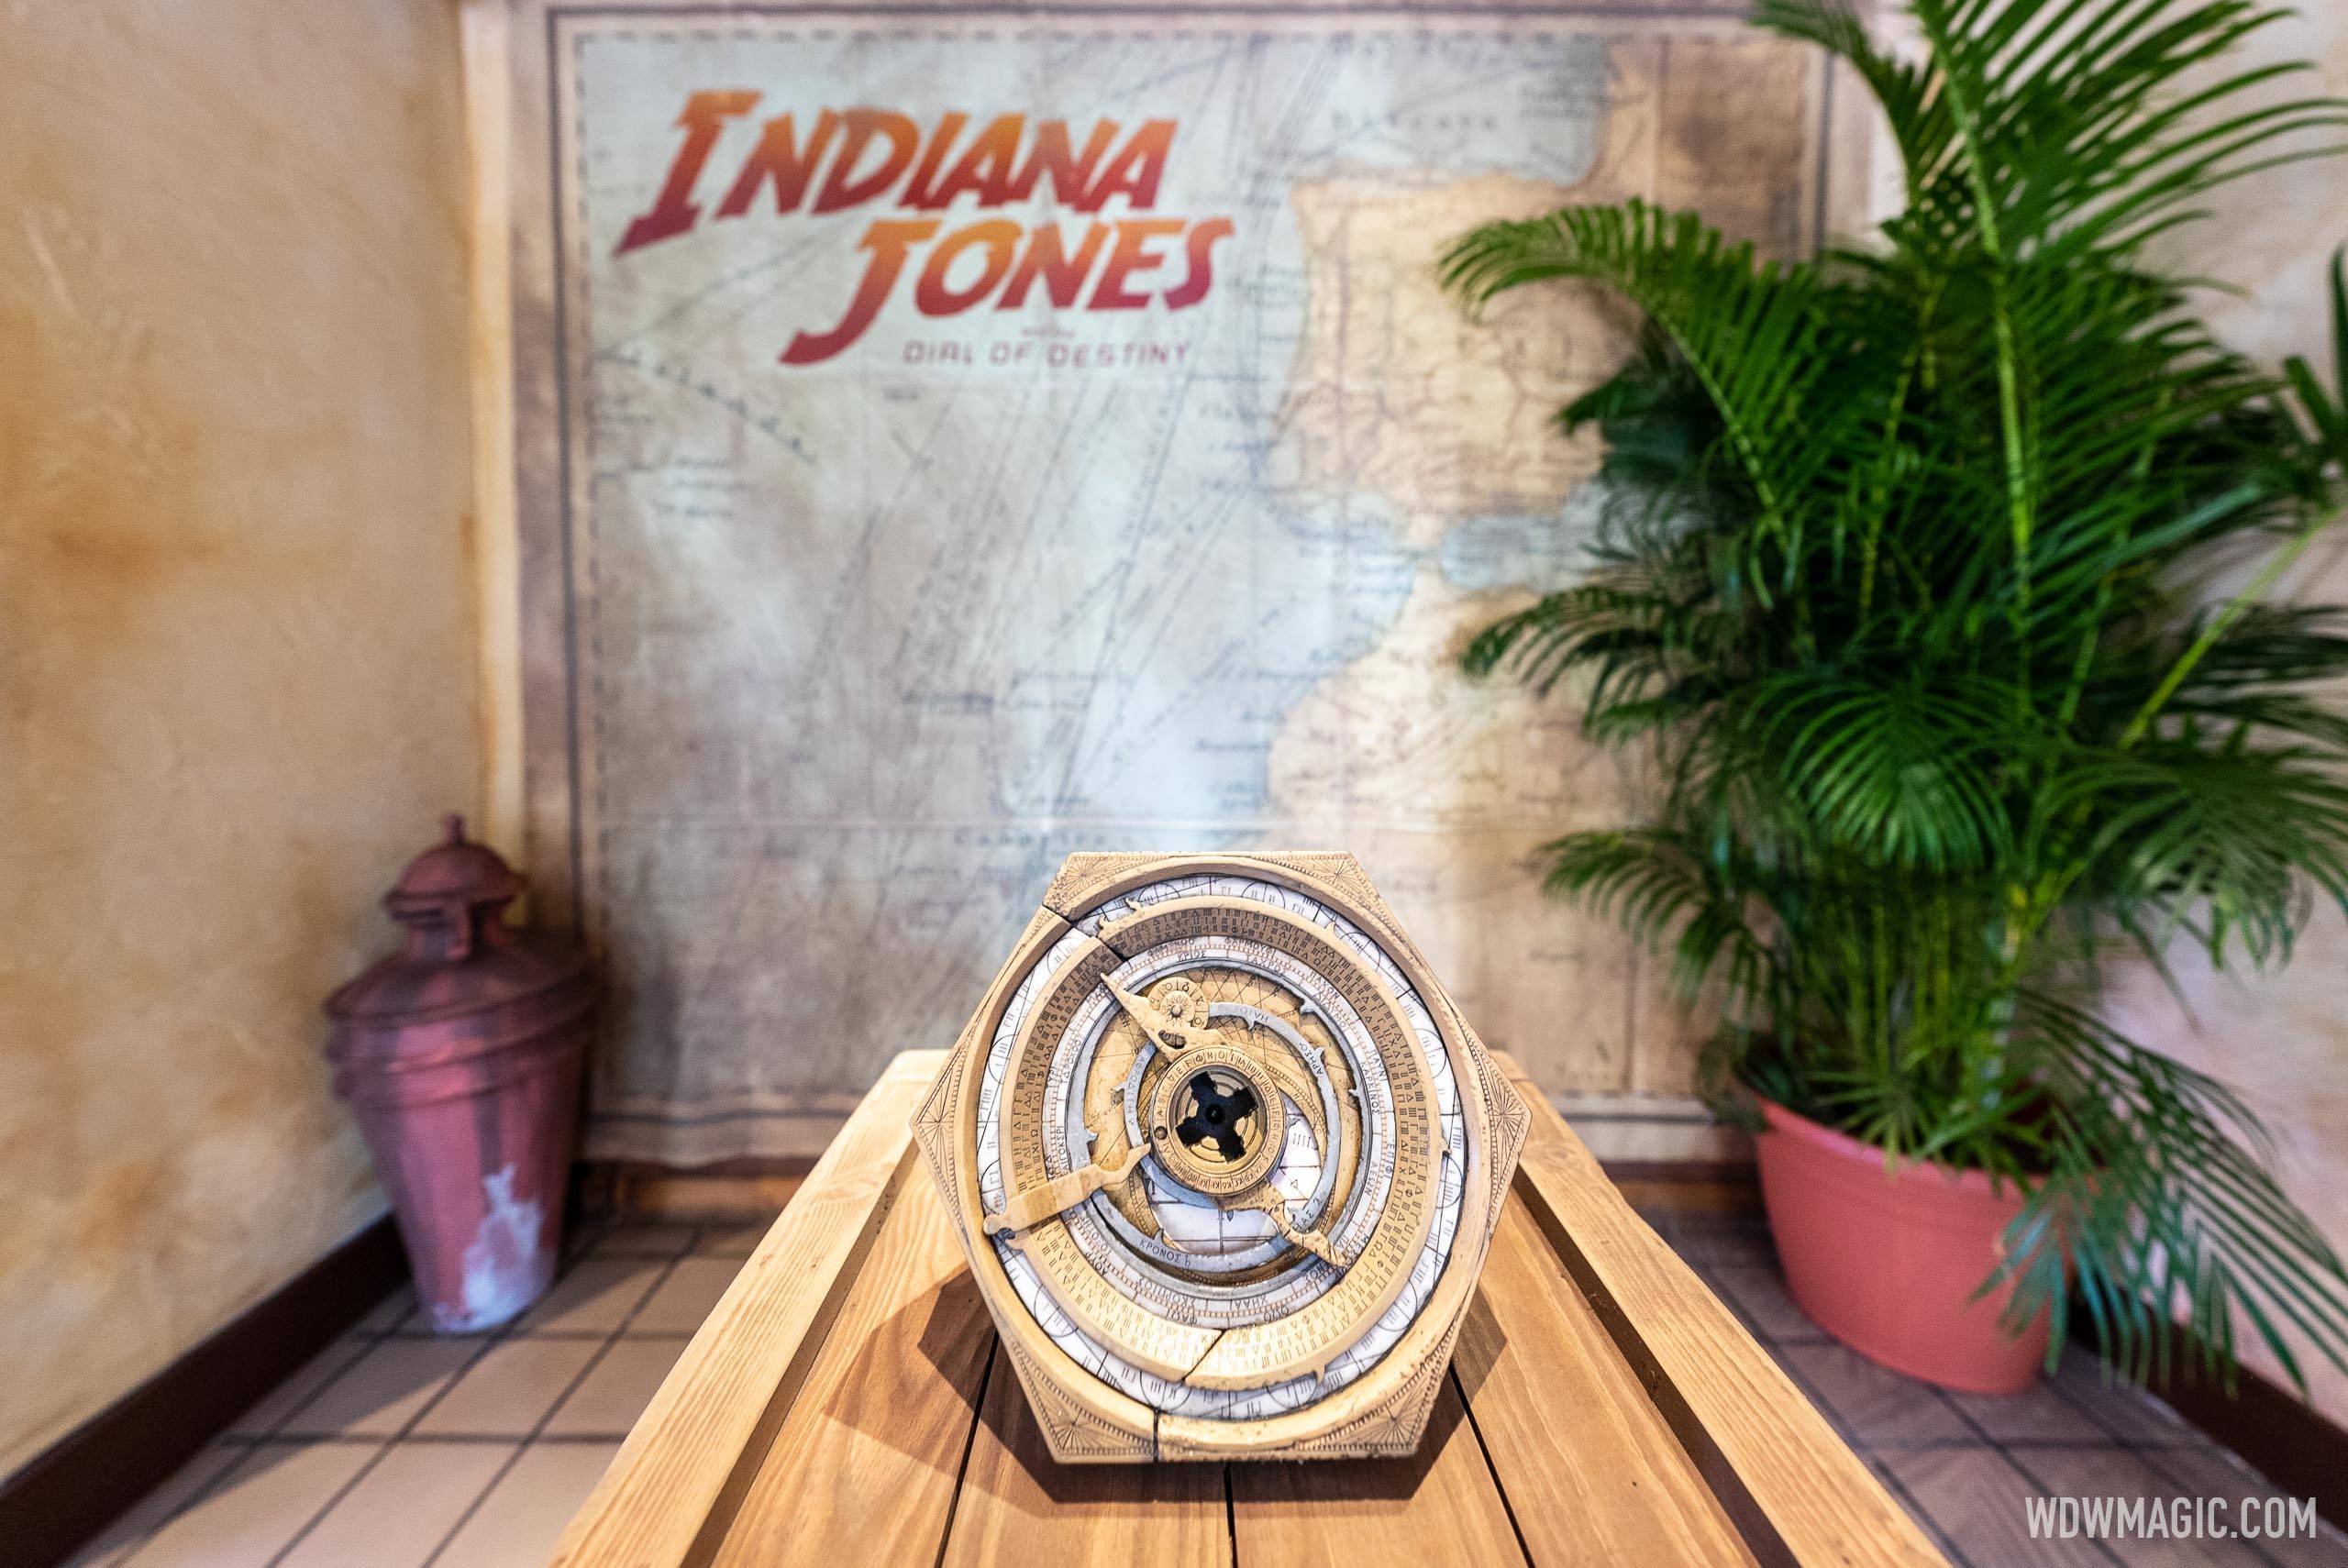 Indiana Jones Den of Destiny tour